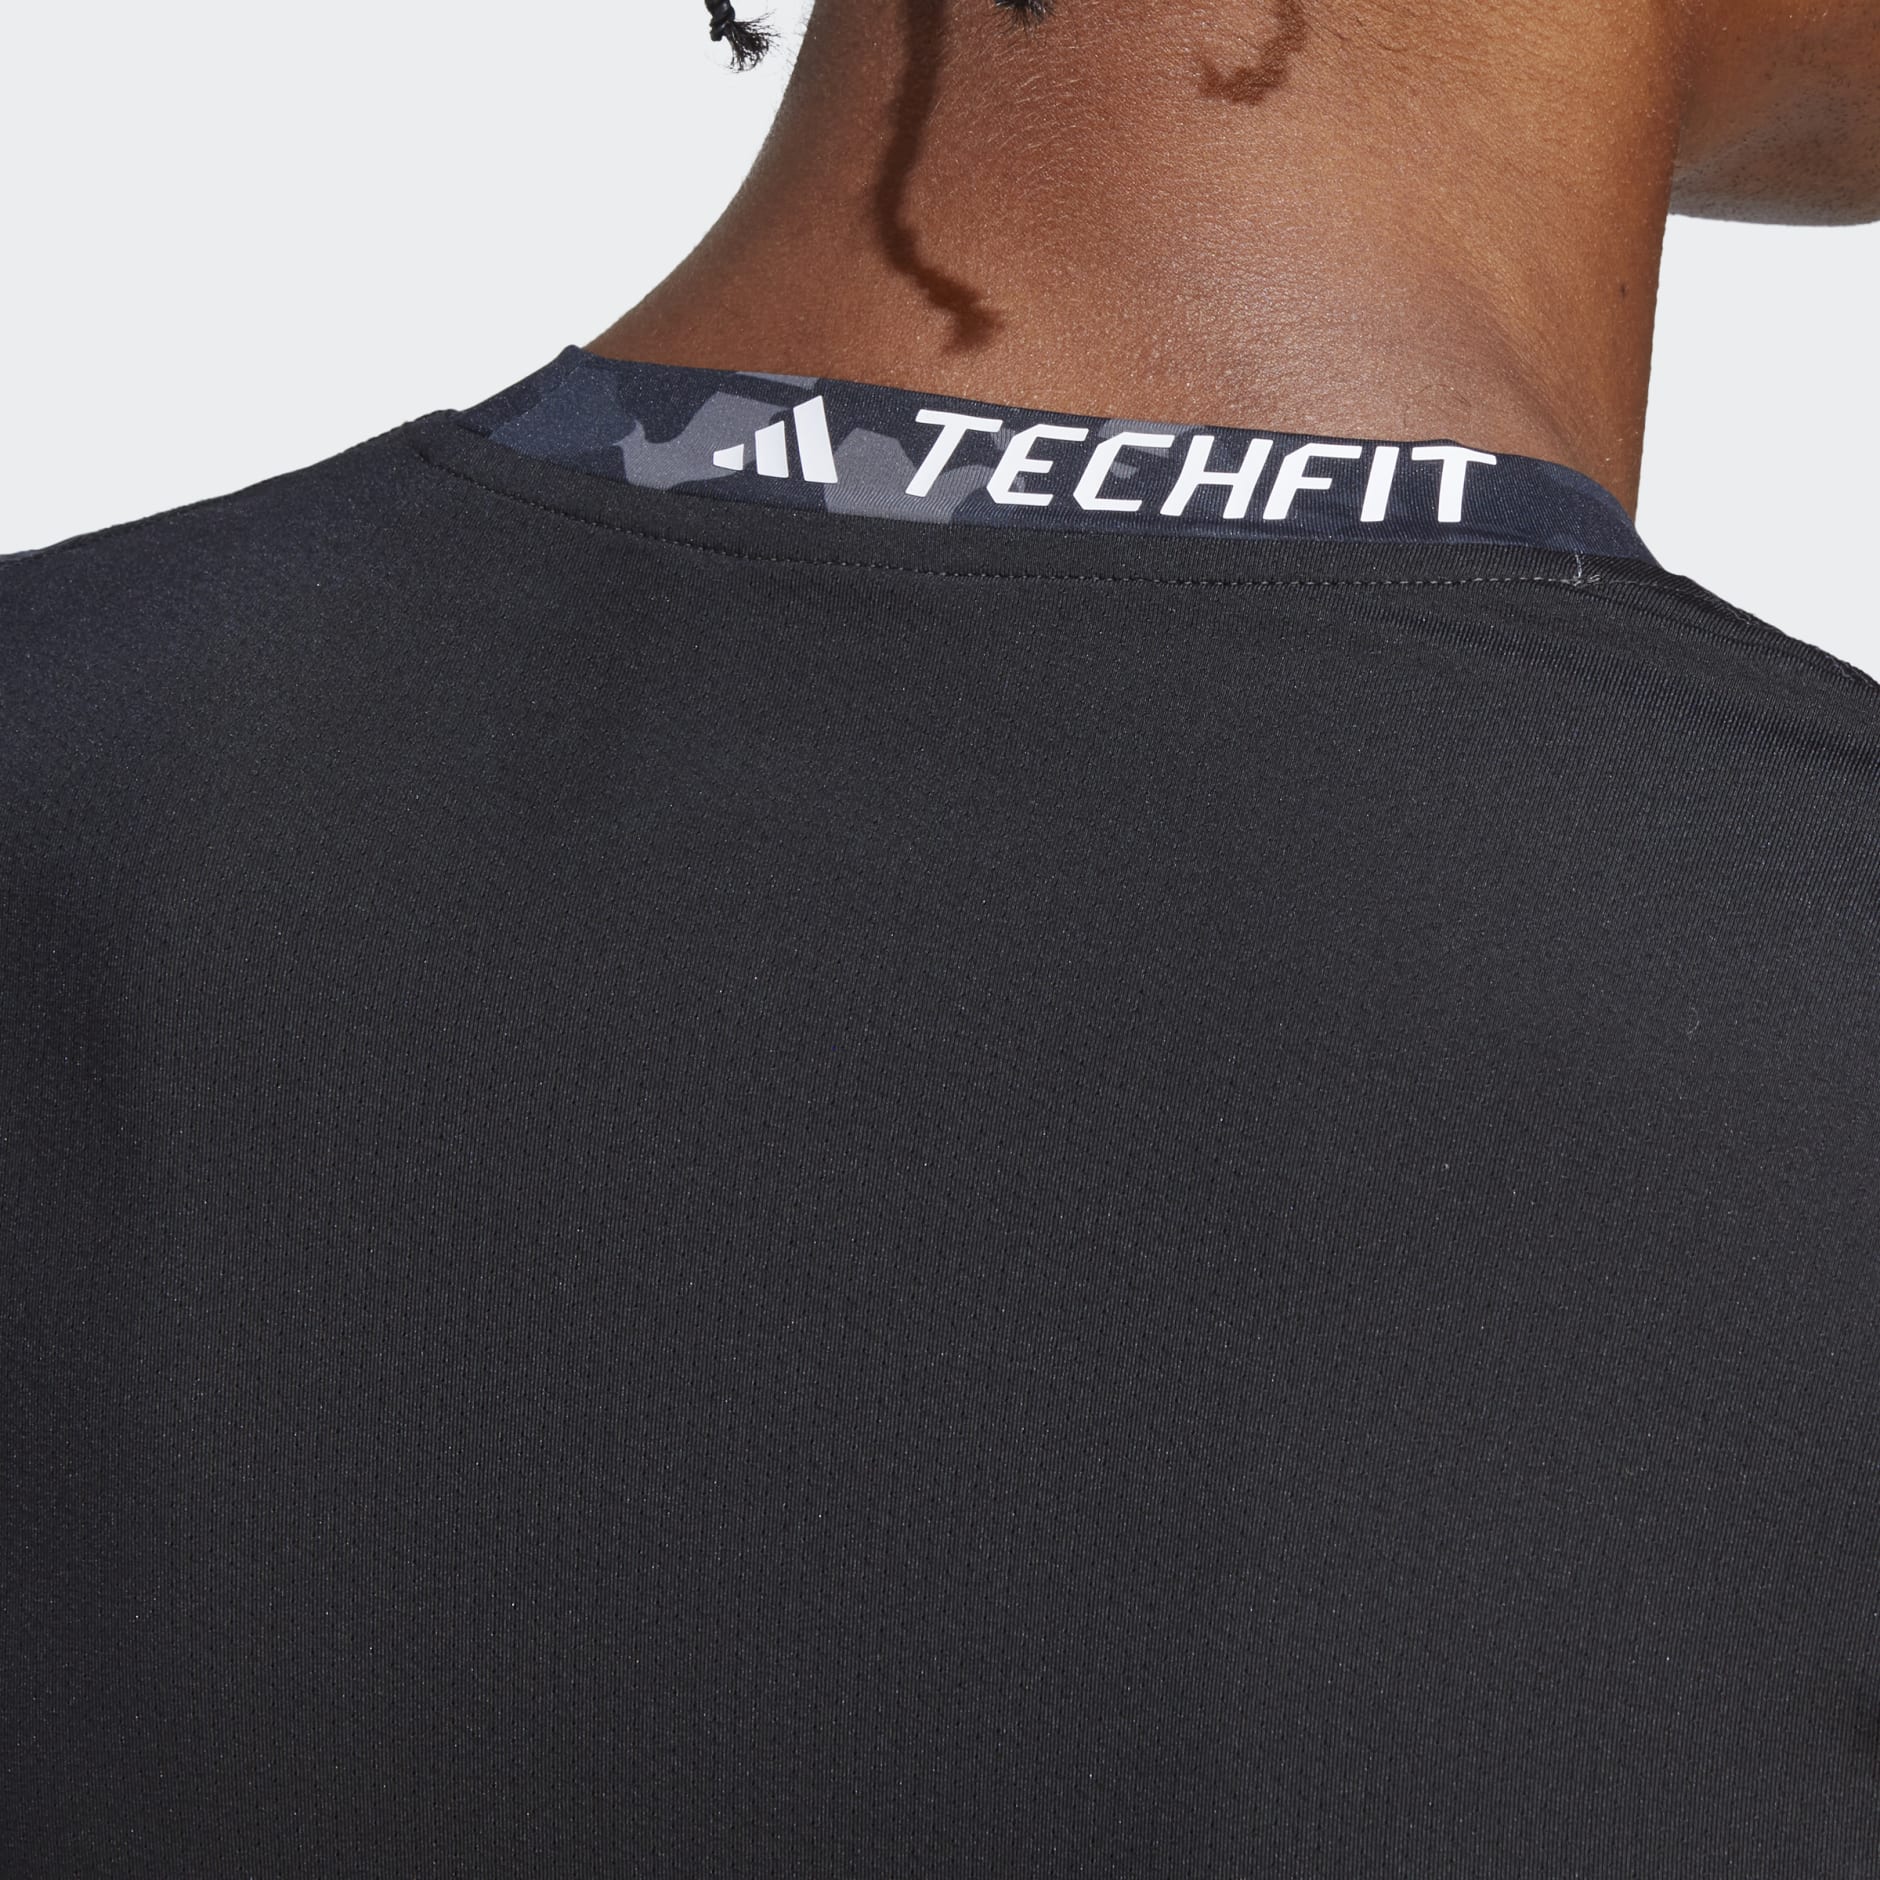 Men's Clothing - Techfit Allover Print Training Long Sleeve Tee - Black